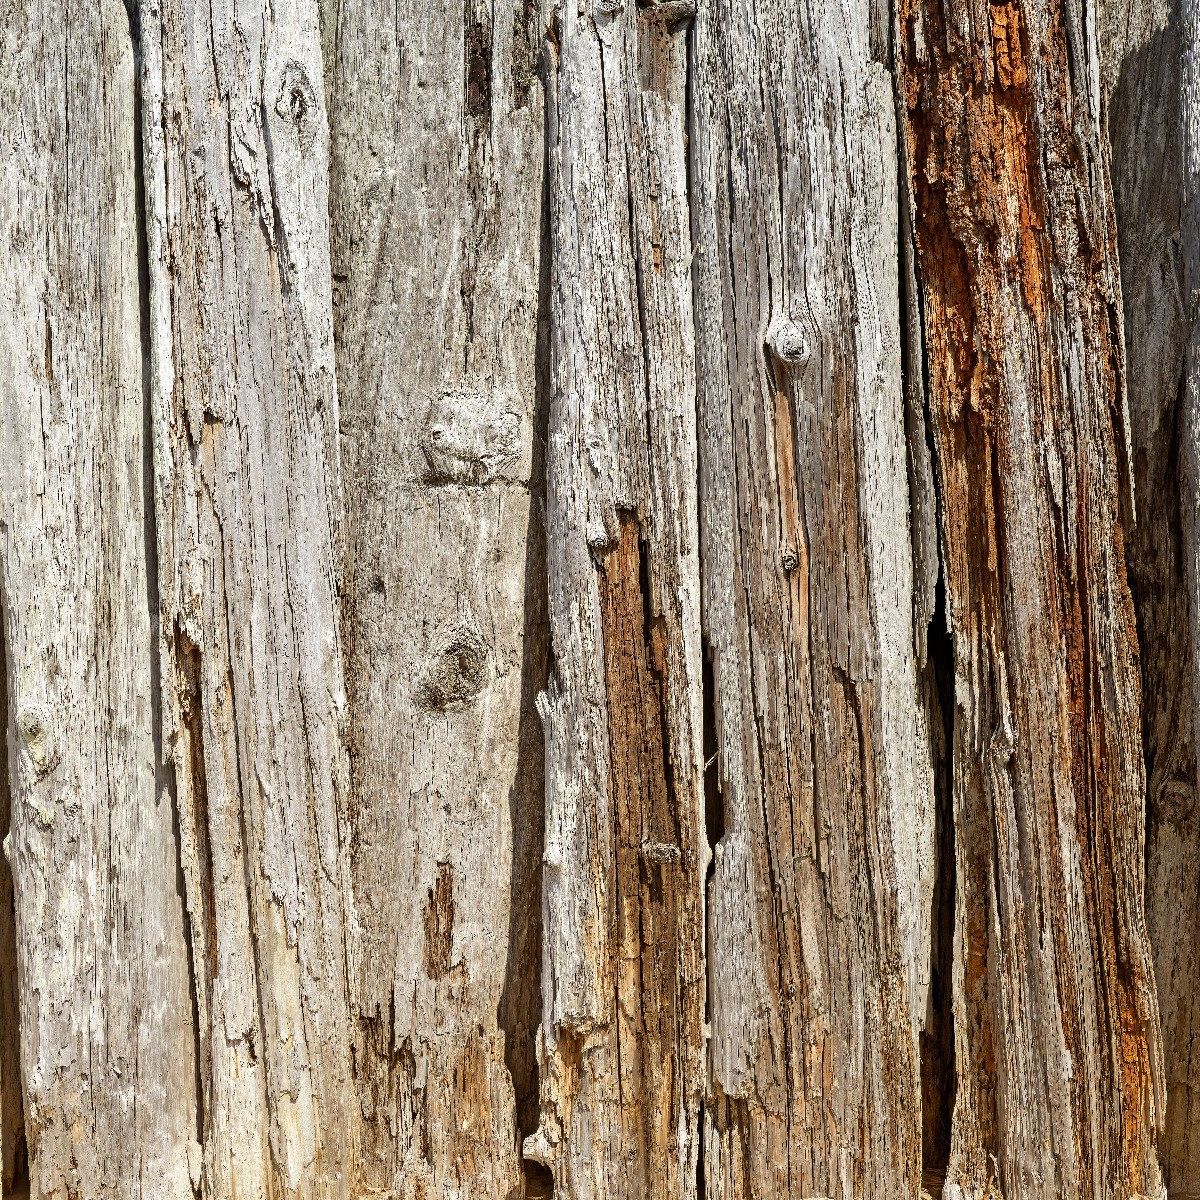 Vertical old wood